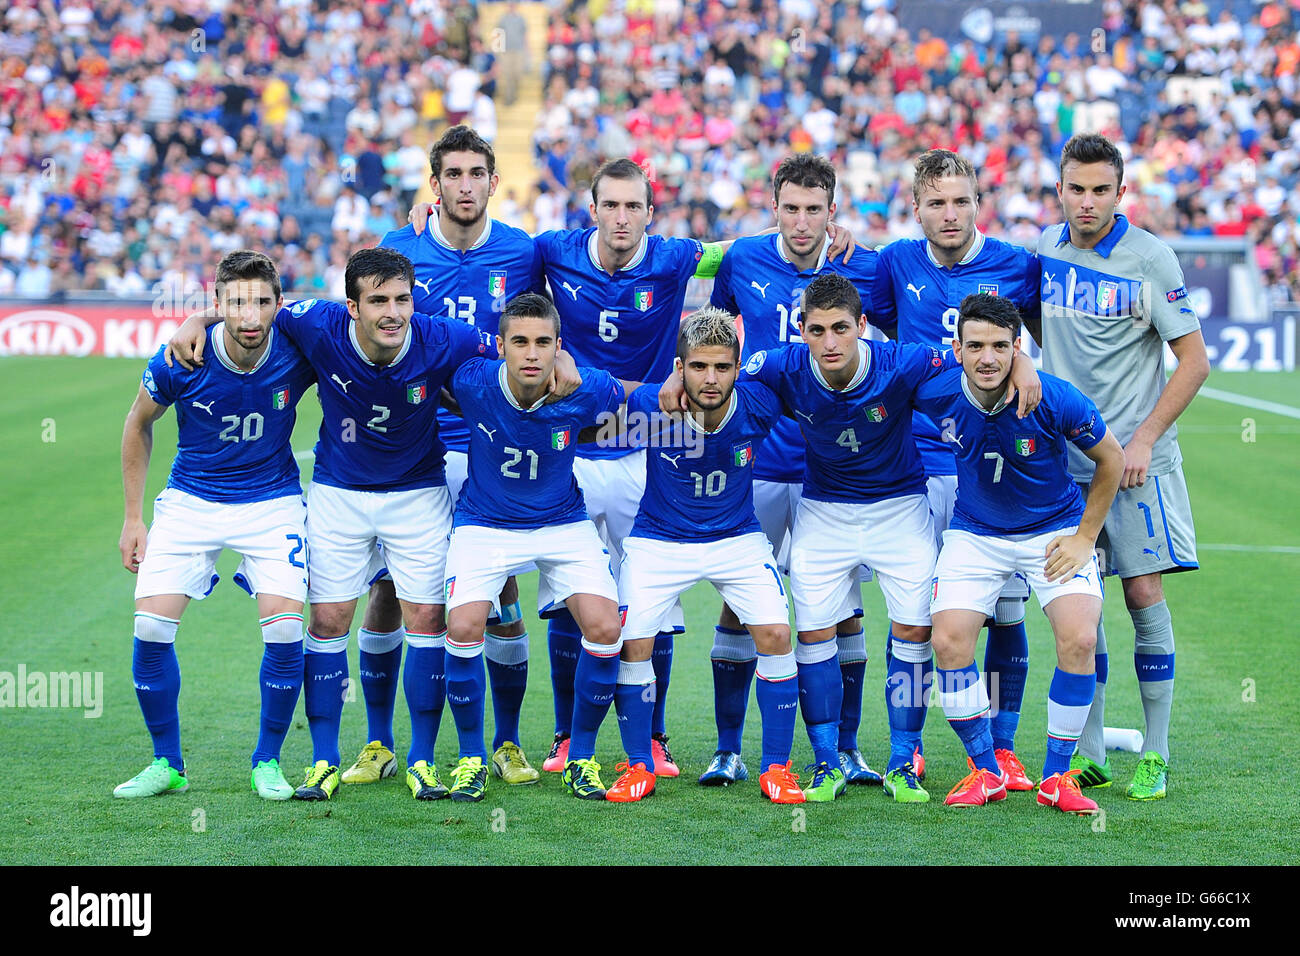 Soccer - UEFA Europei Under 21 Championship 2013 - finale - Italia v Spagna  - Teddy Stadium Foto stock - Alamy